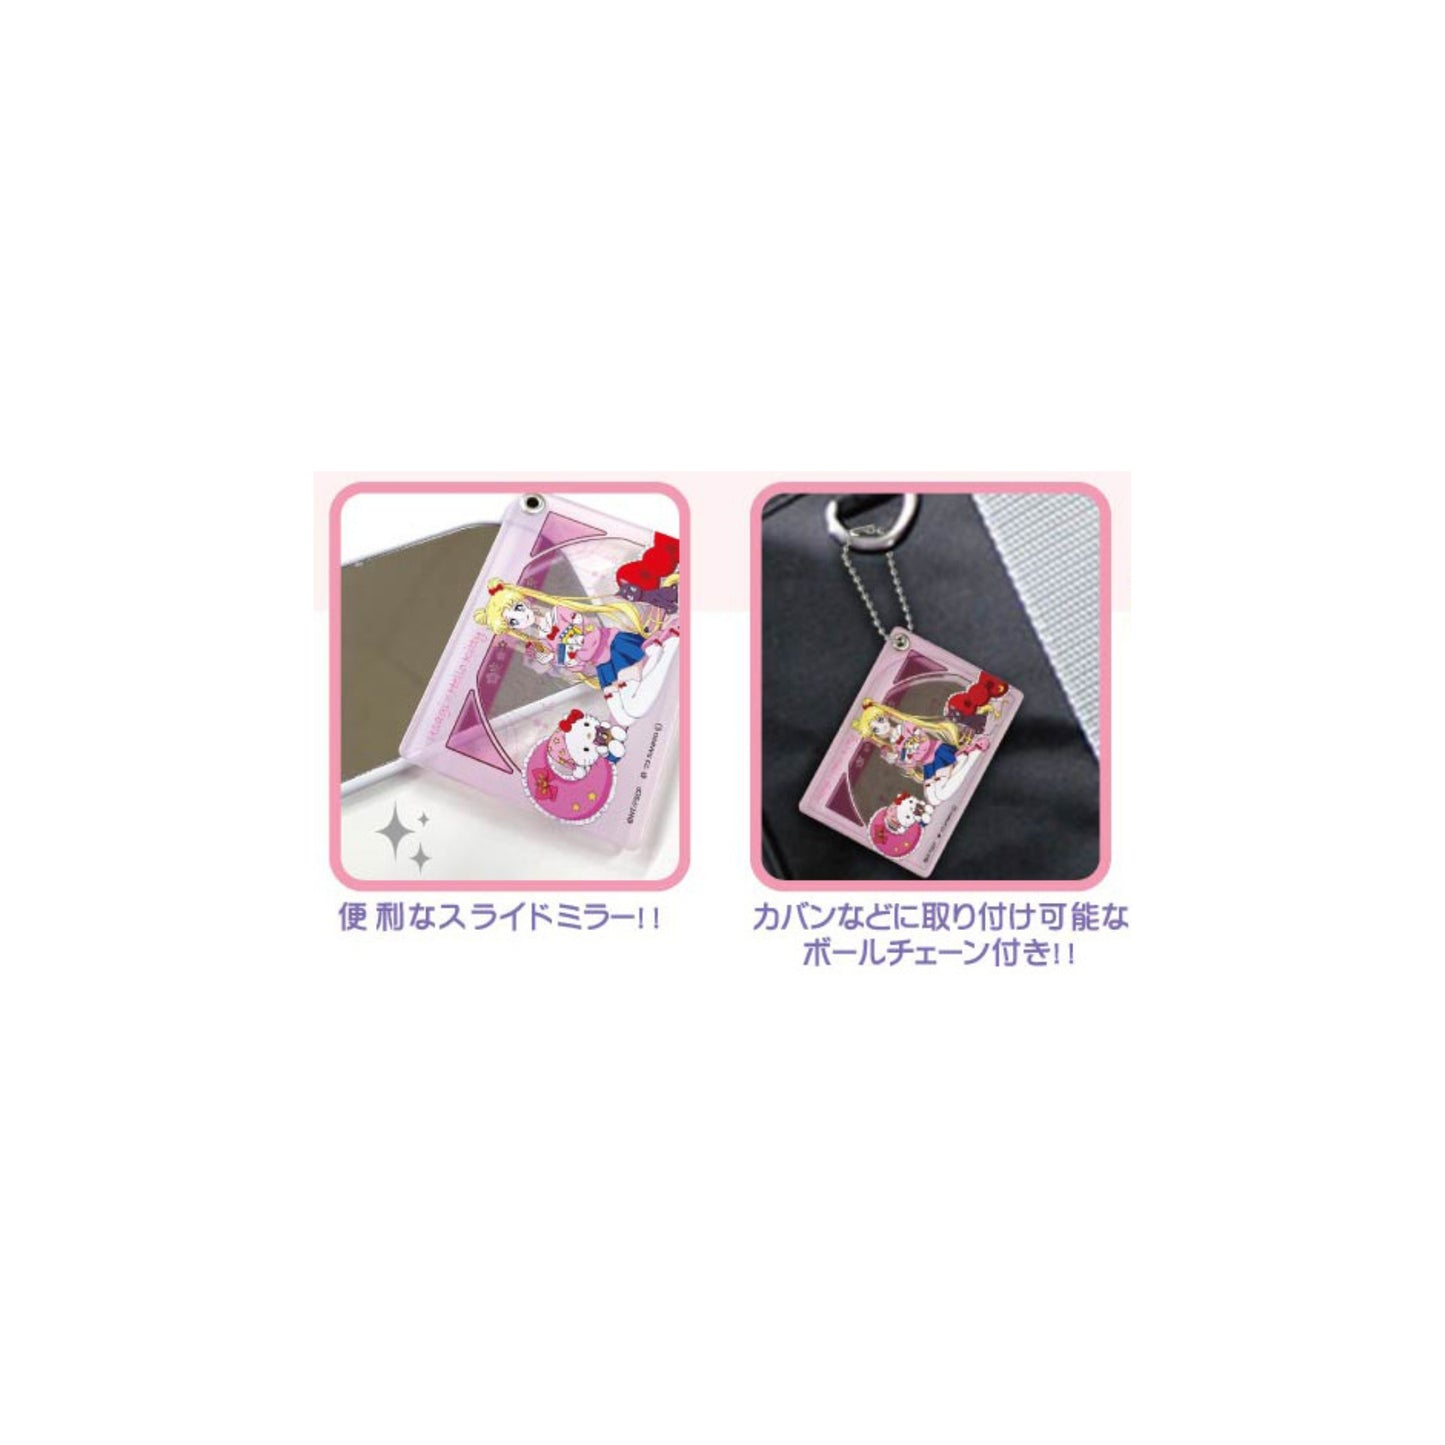 Sailor Moon x Sanrio Characters - Slide Mirror: Michiru x Little Twin Stars